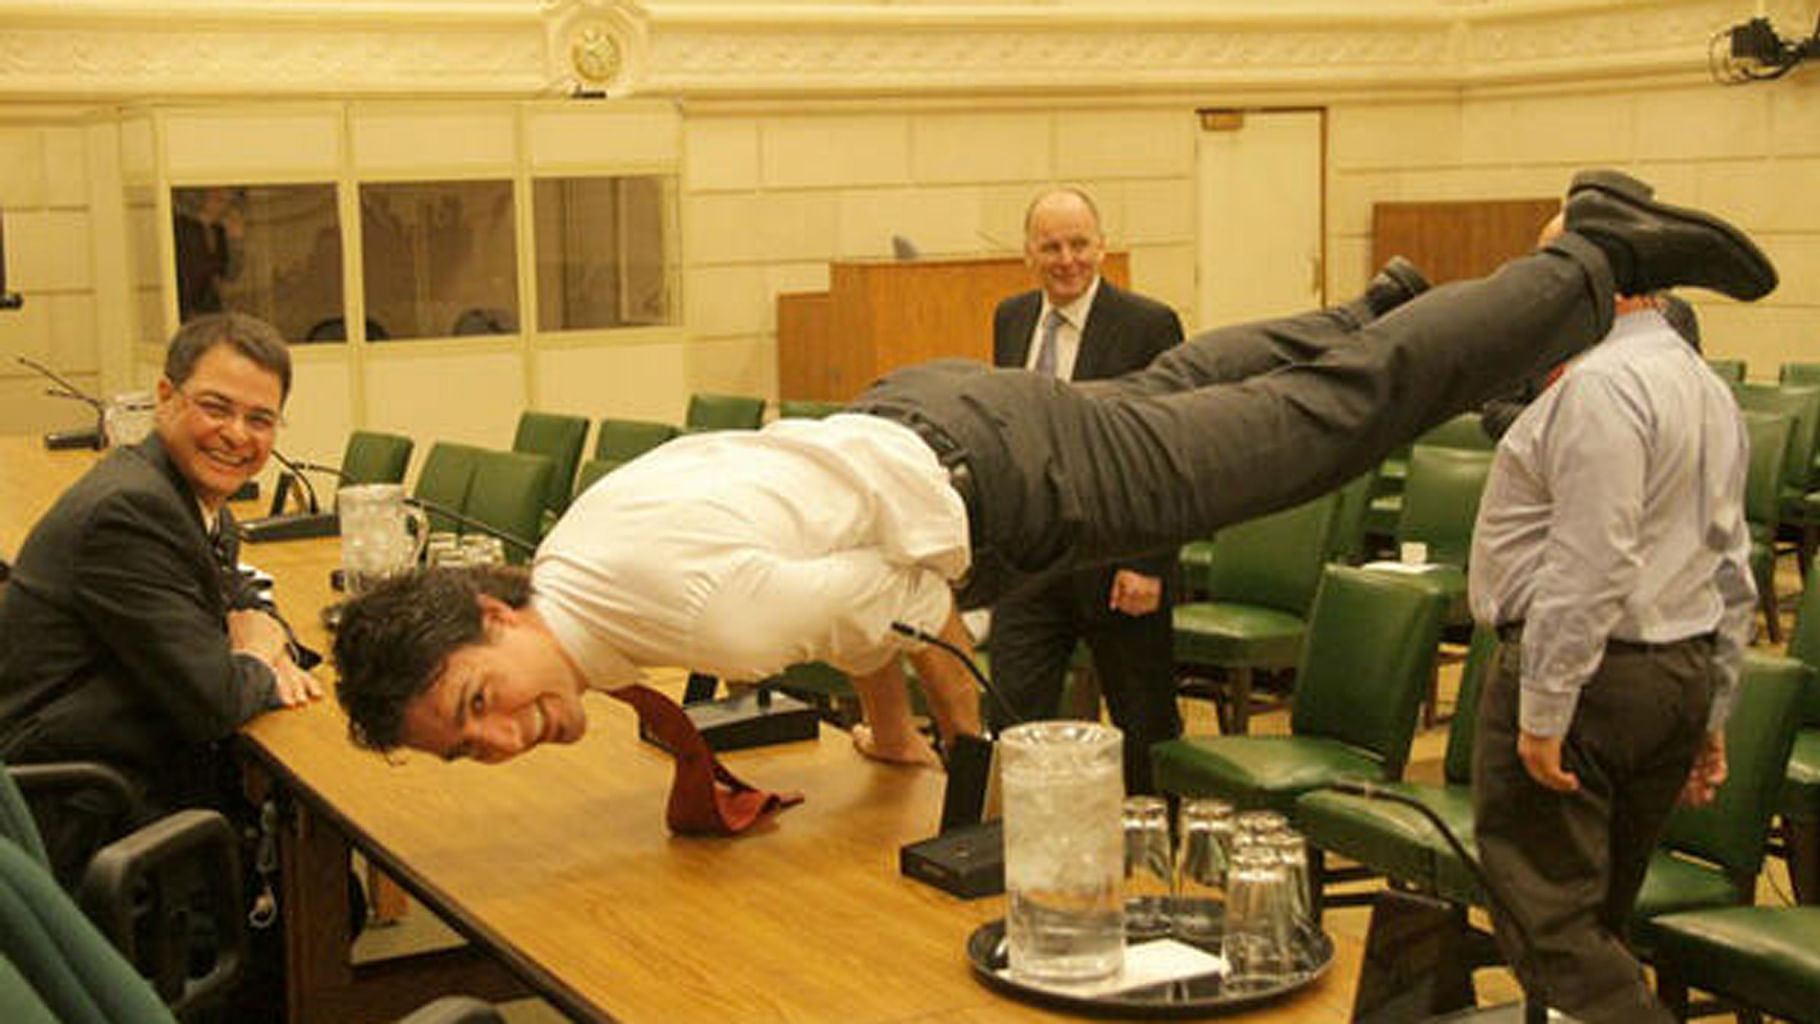 Justin Trudeau does a handstand in 2013. (Photo: <a href="https://twitter.com/JustinTrudeau/status/321089308381564928">Twitter.com/JustinTrudeau</a>)